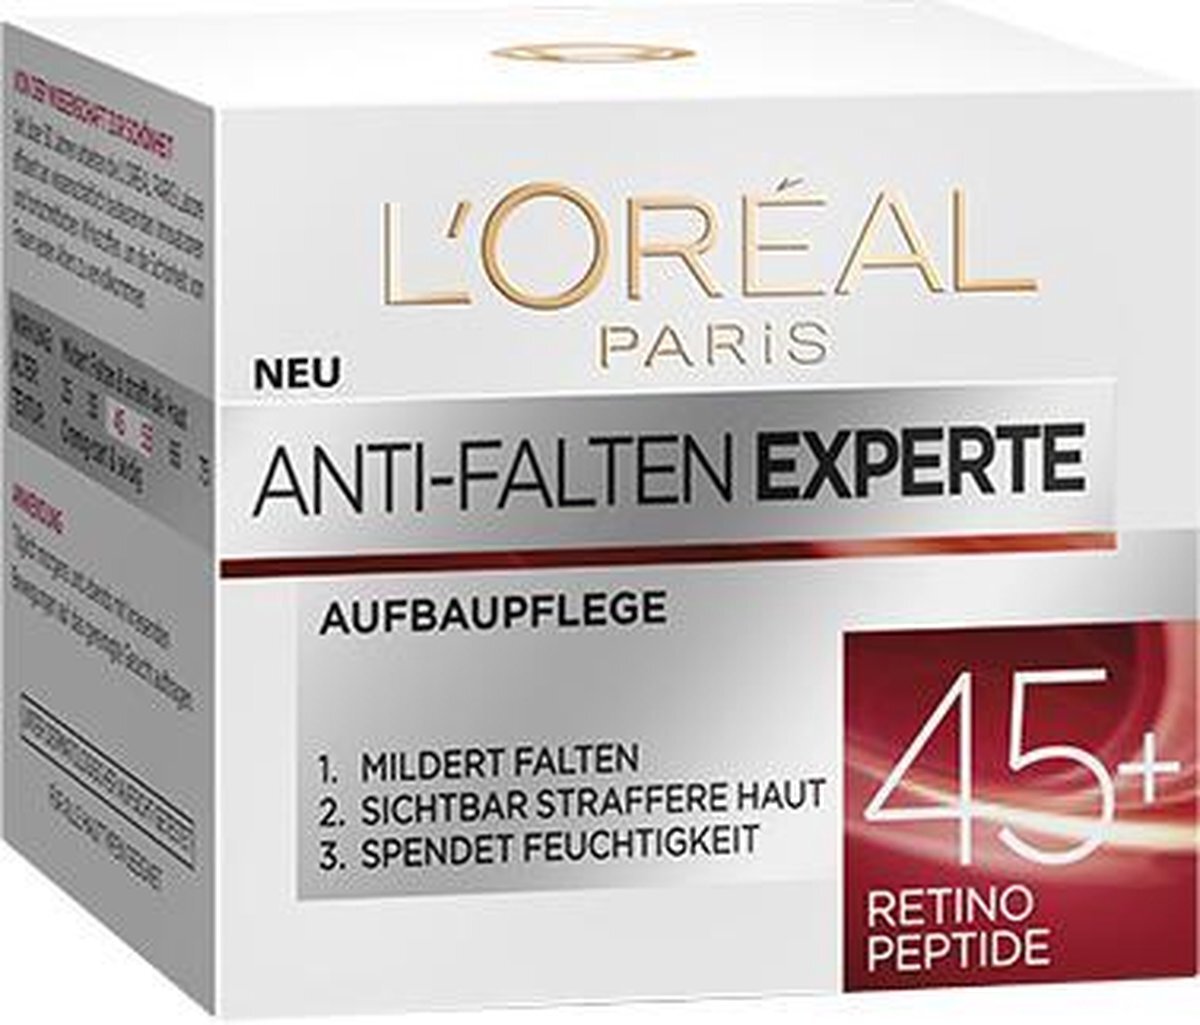 L'Oréal L’ORÉAL ANTI-FALTEN EXPERTE 45+ RETINO PEPTIDE